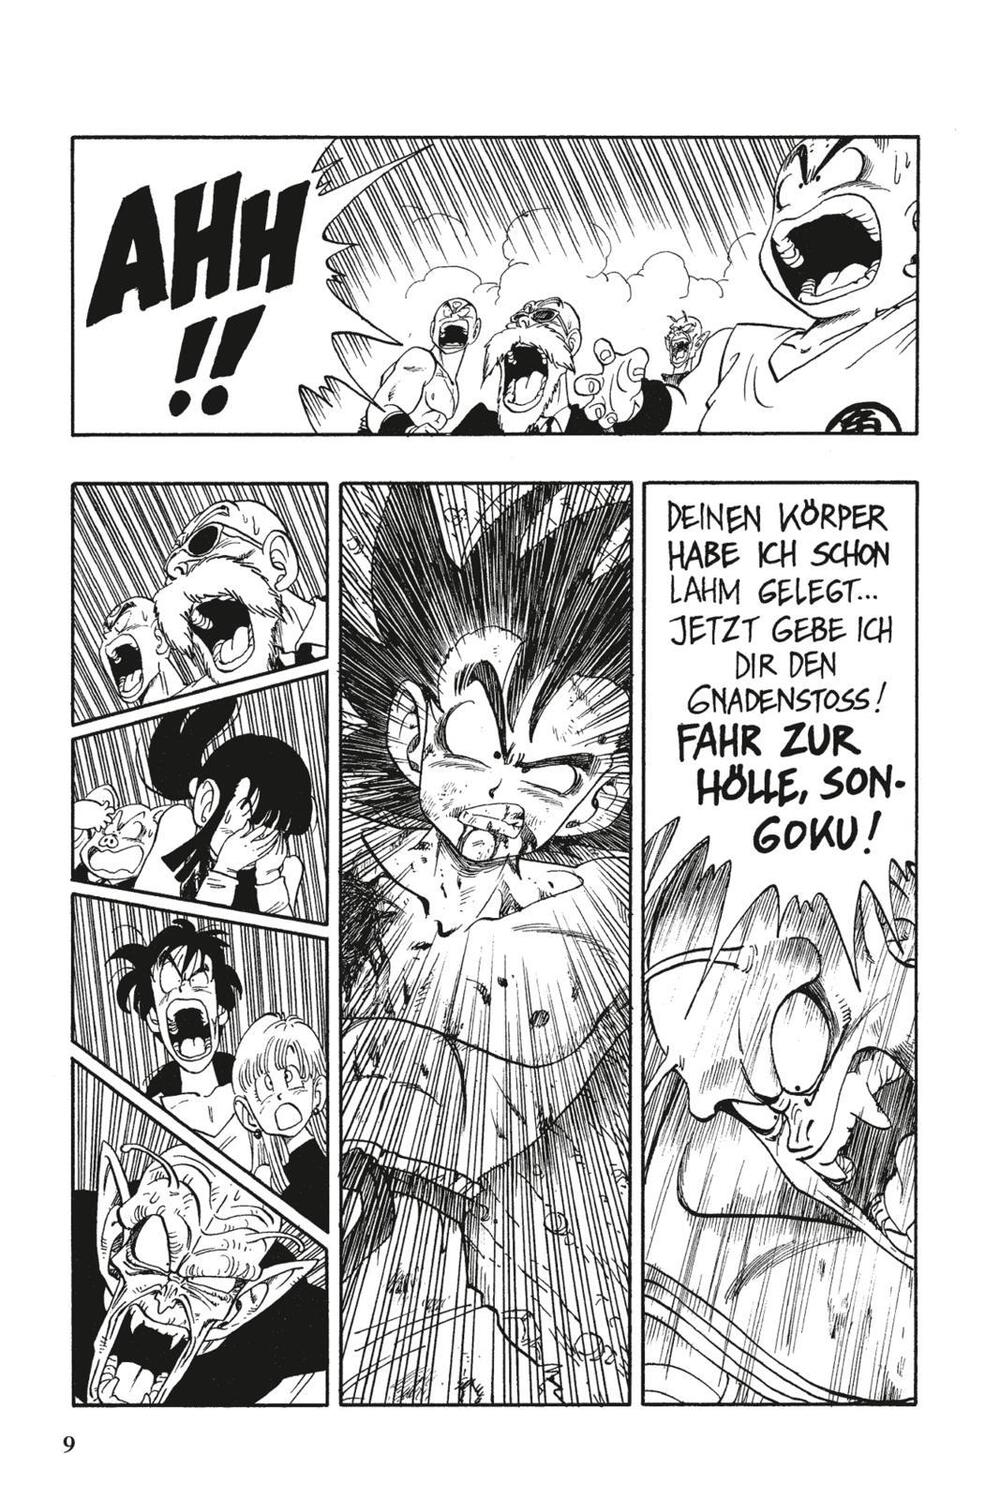 Bild: 9783551733092 | Dragon Ball 17. Son-Gokus Bruder | Akira Toriyama | Taschenbuch | 2001